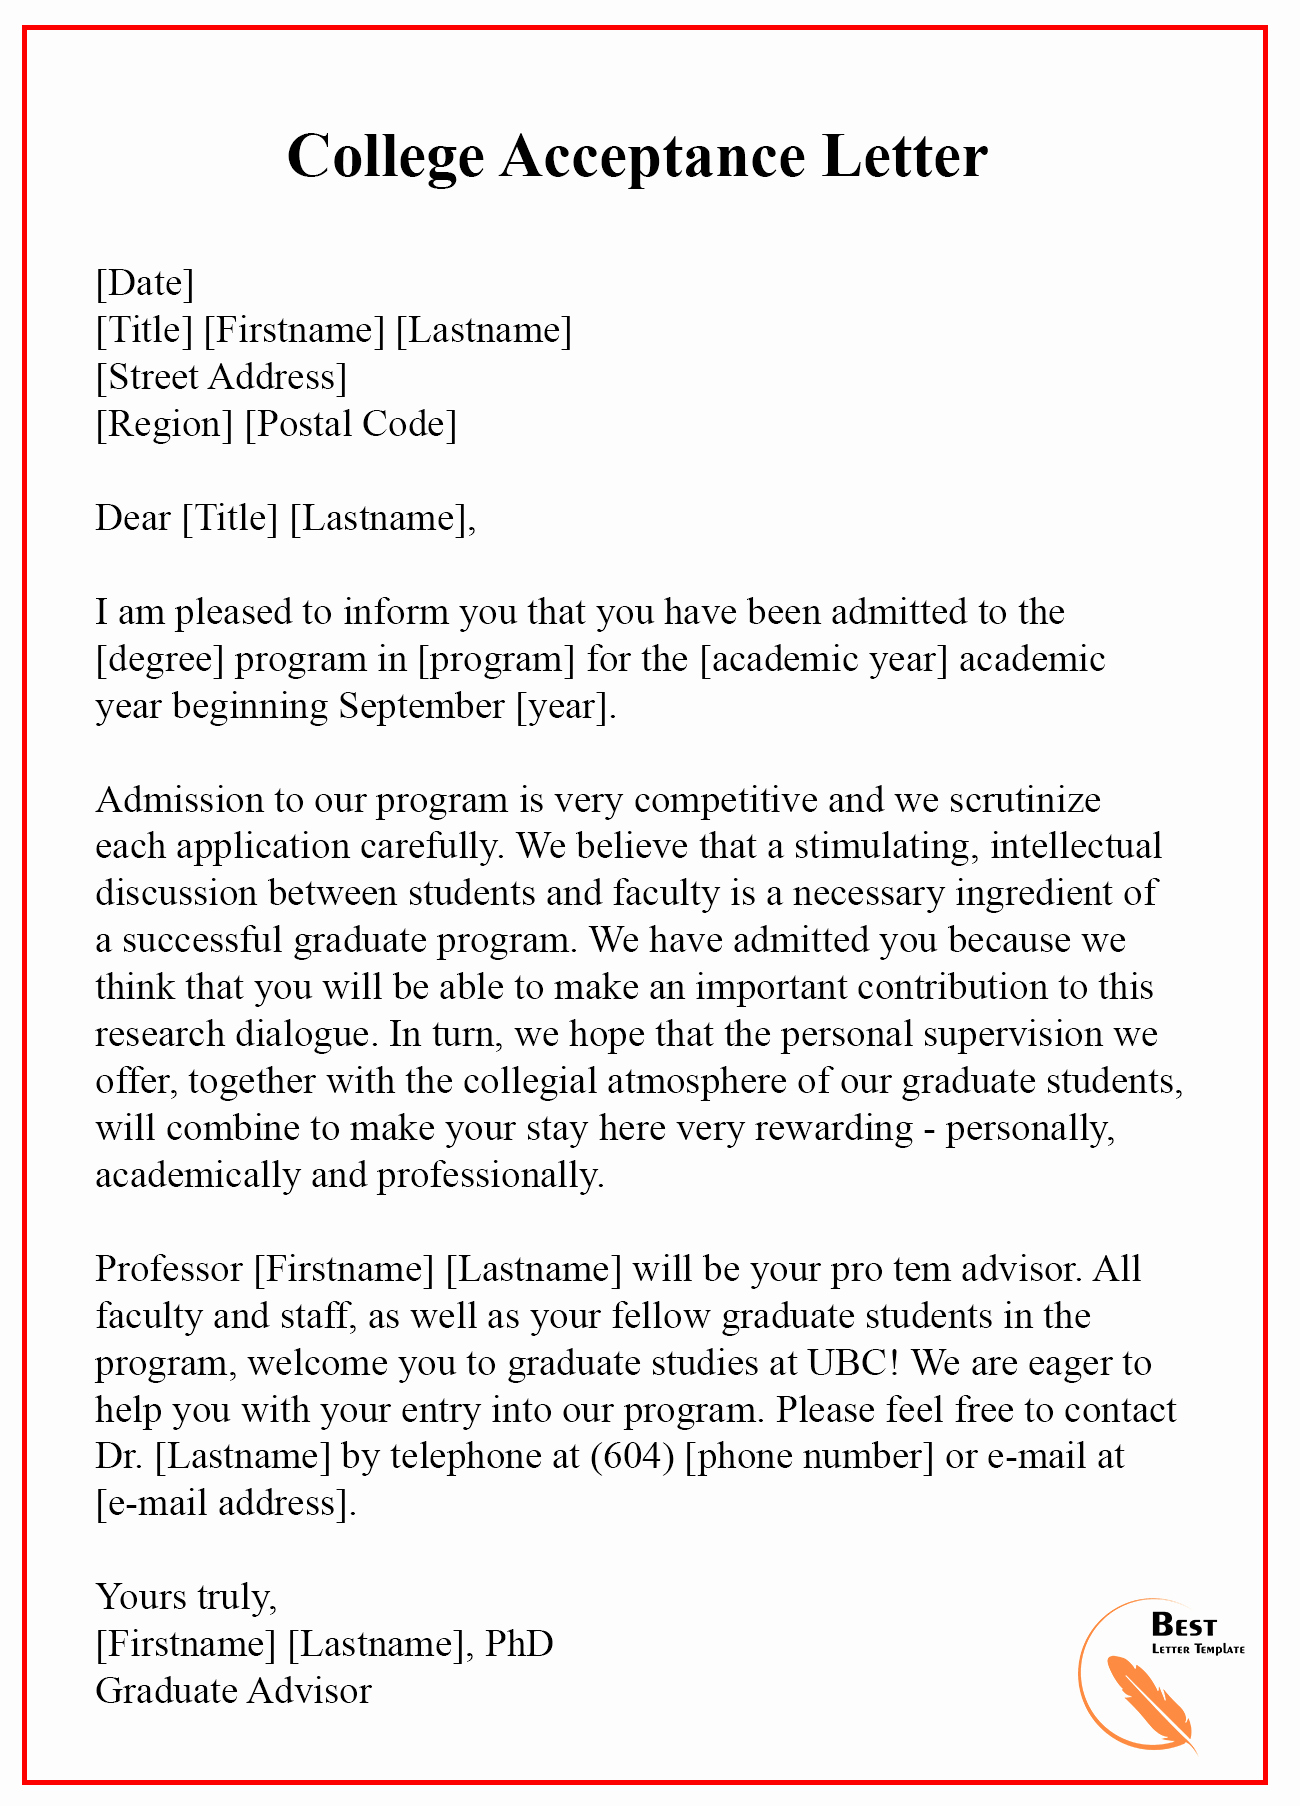 College Acceptance Letter Sample Luxury 7 School College University Acceptance Letter Template [examples &amp; Sample]